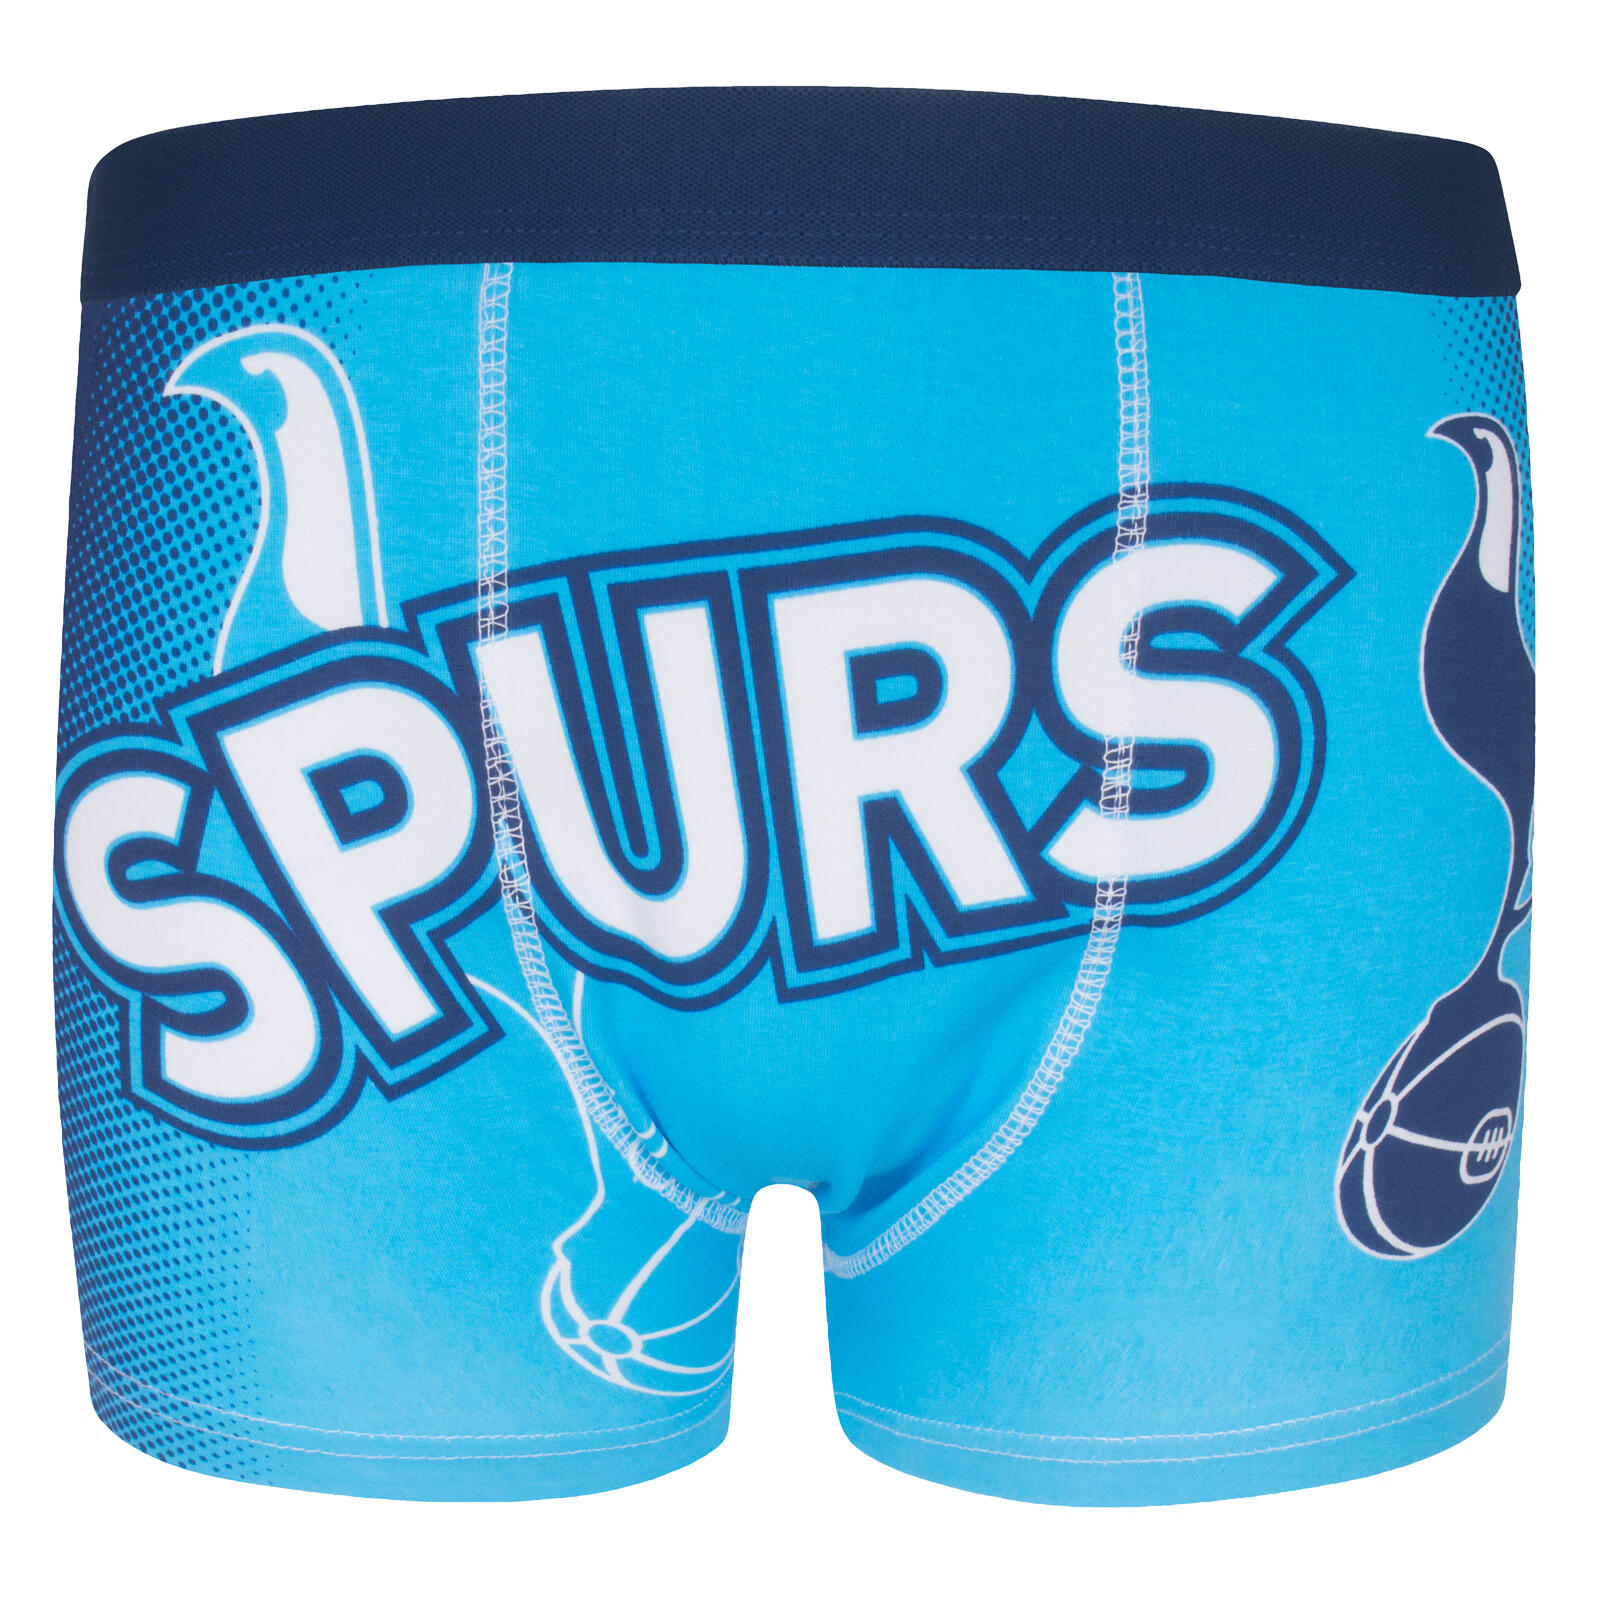 TOTTENHAM HOTSPUR Tottenham Hotspur Boys Boxer Shorts 1 Pack OFFICIAL Football Gift